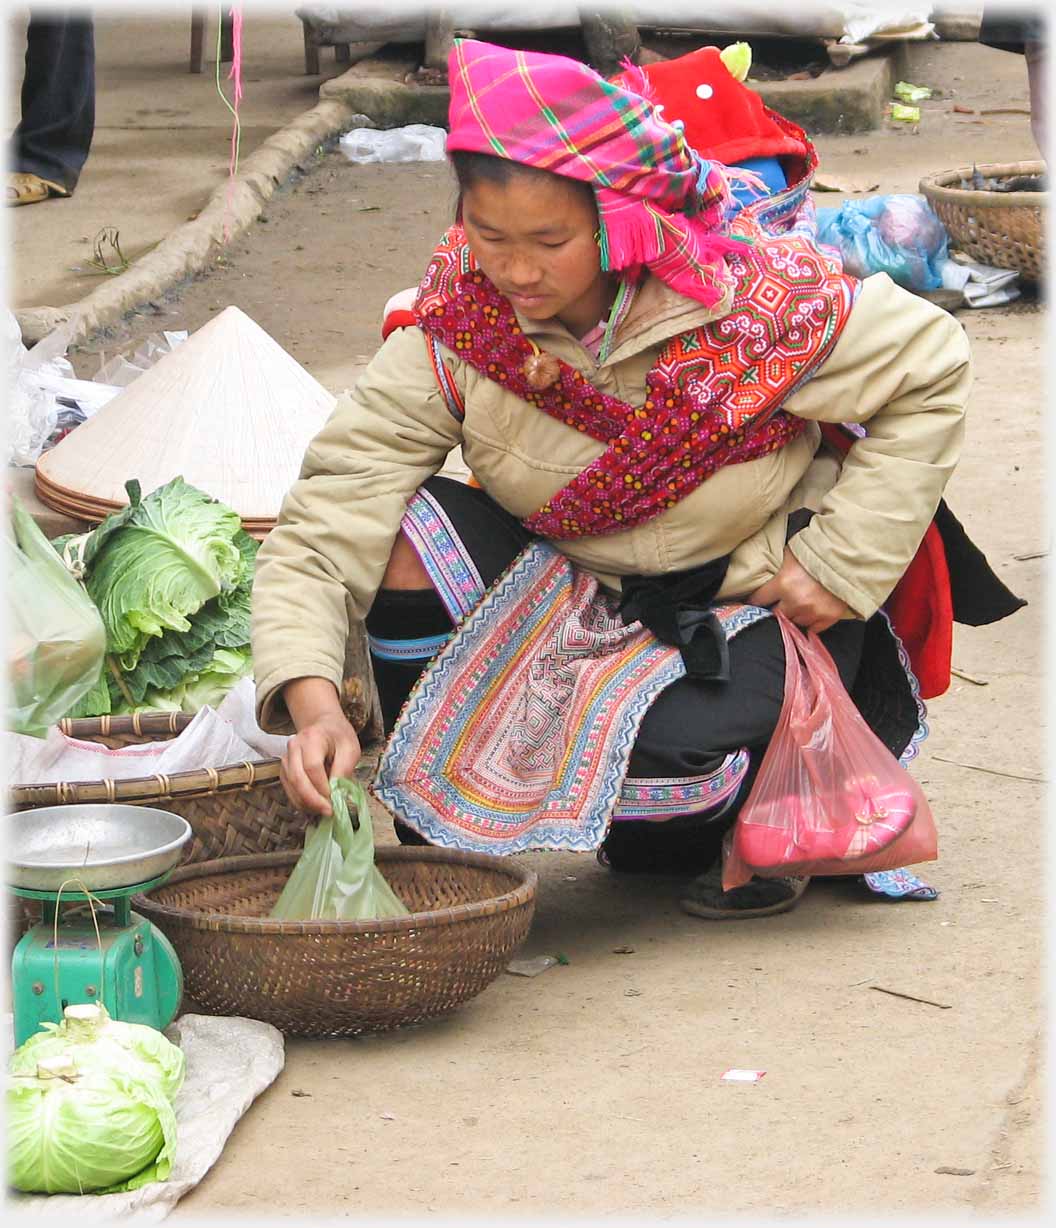 Woman squatting down examining vegetables.